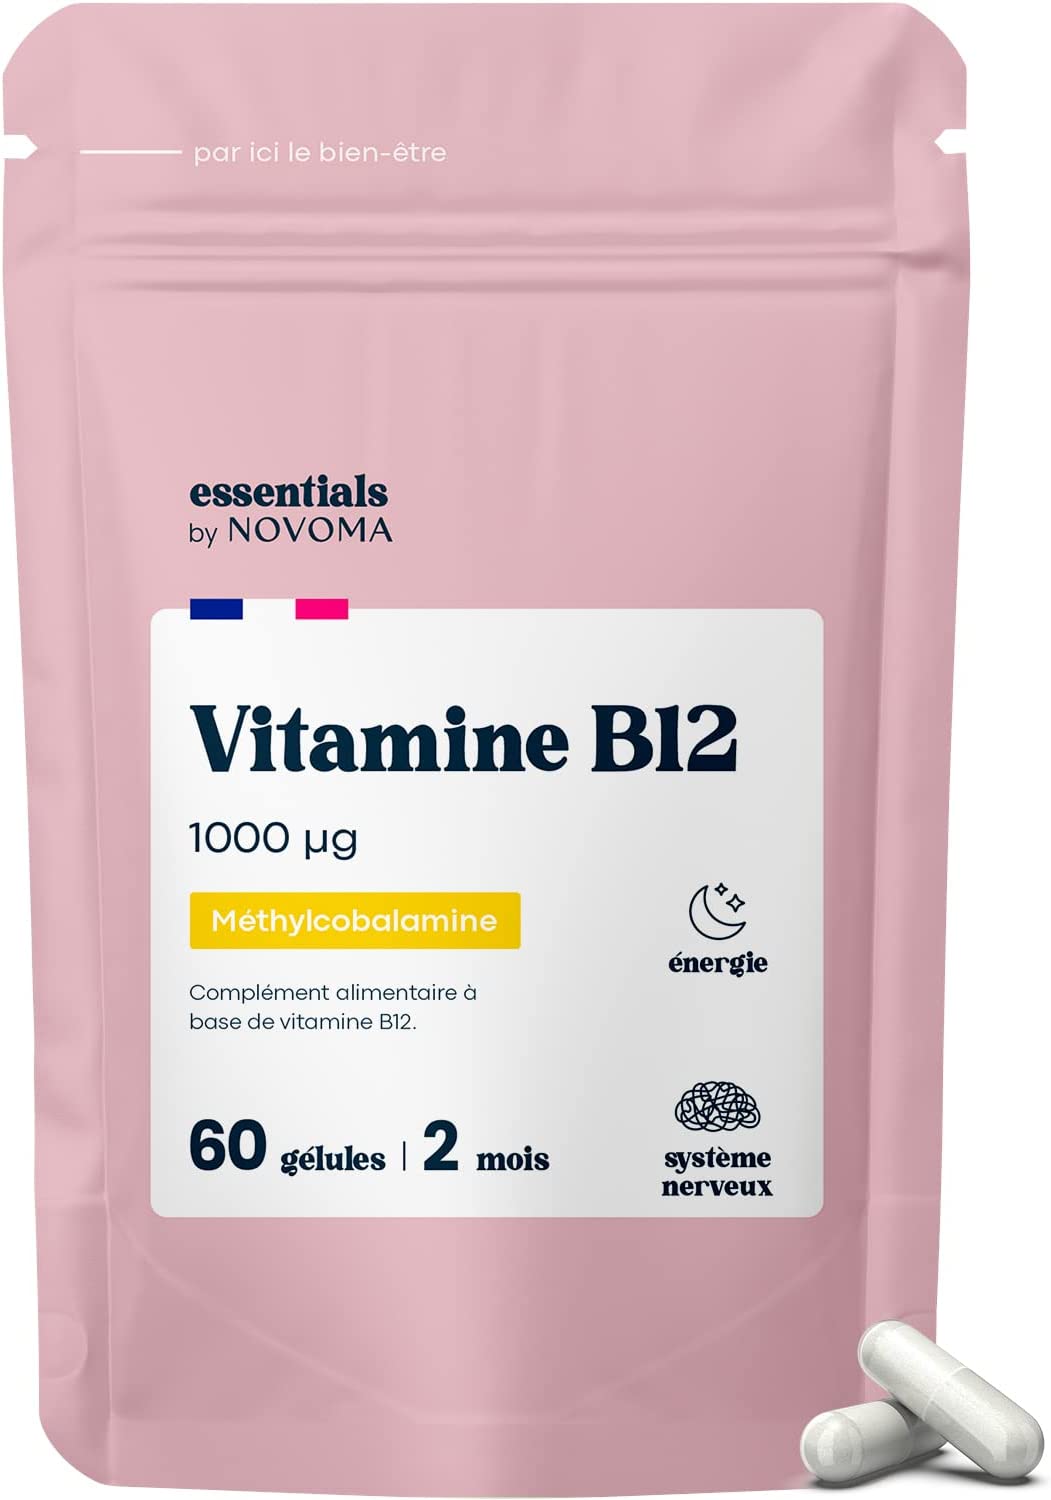 Vitamines B12 essentials by novoma